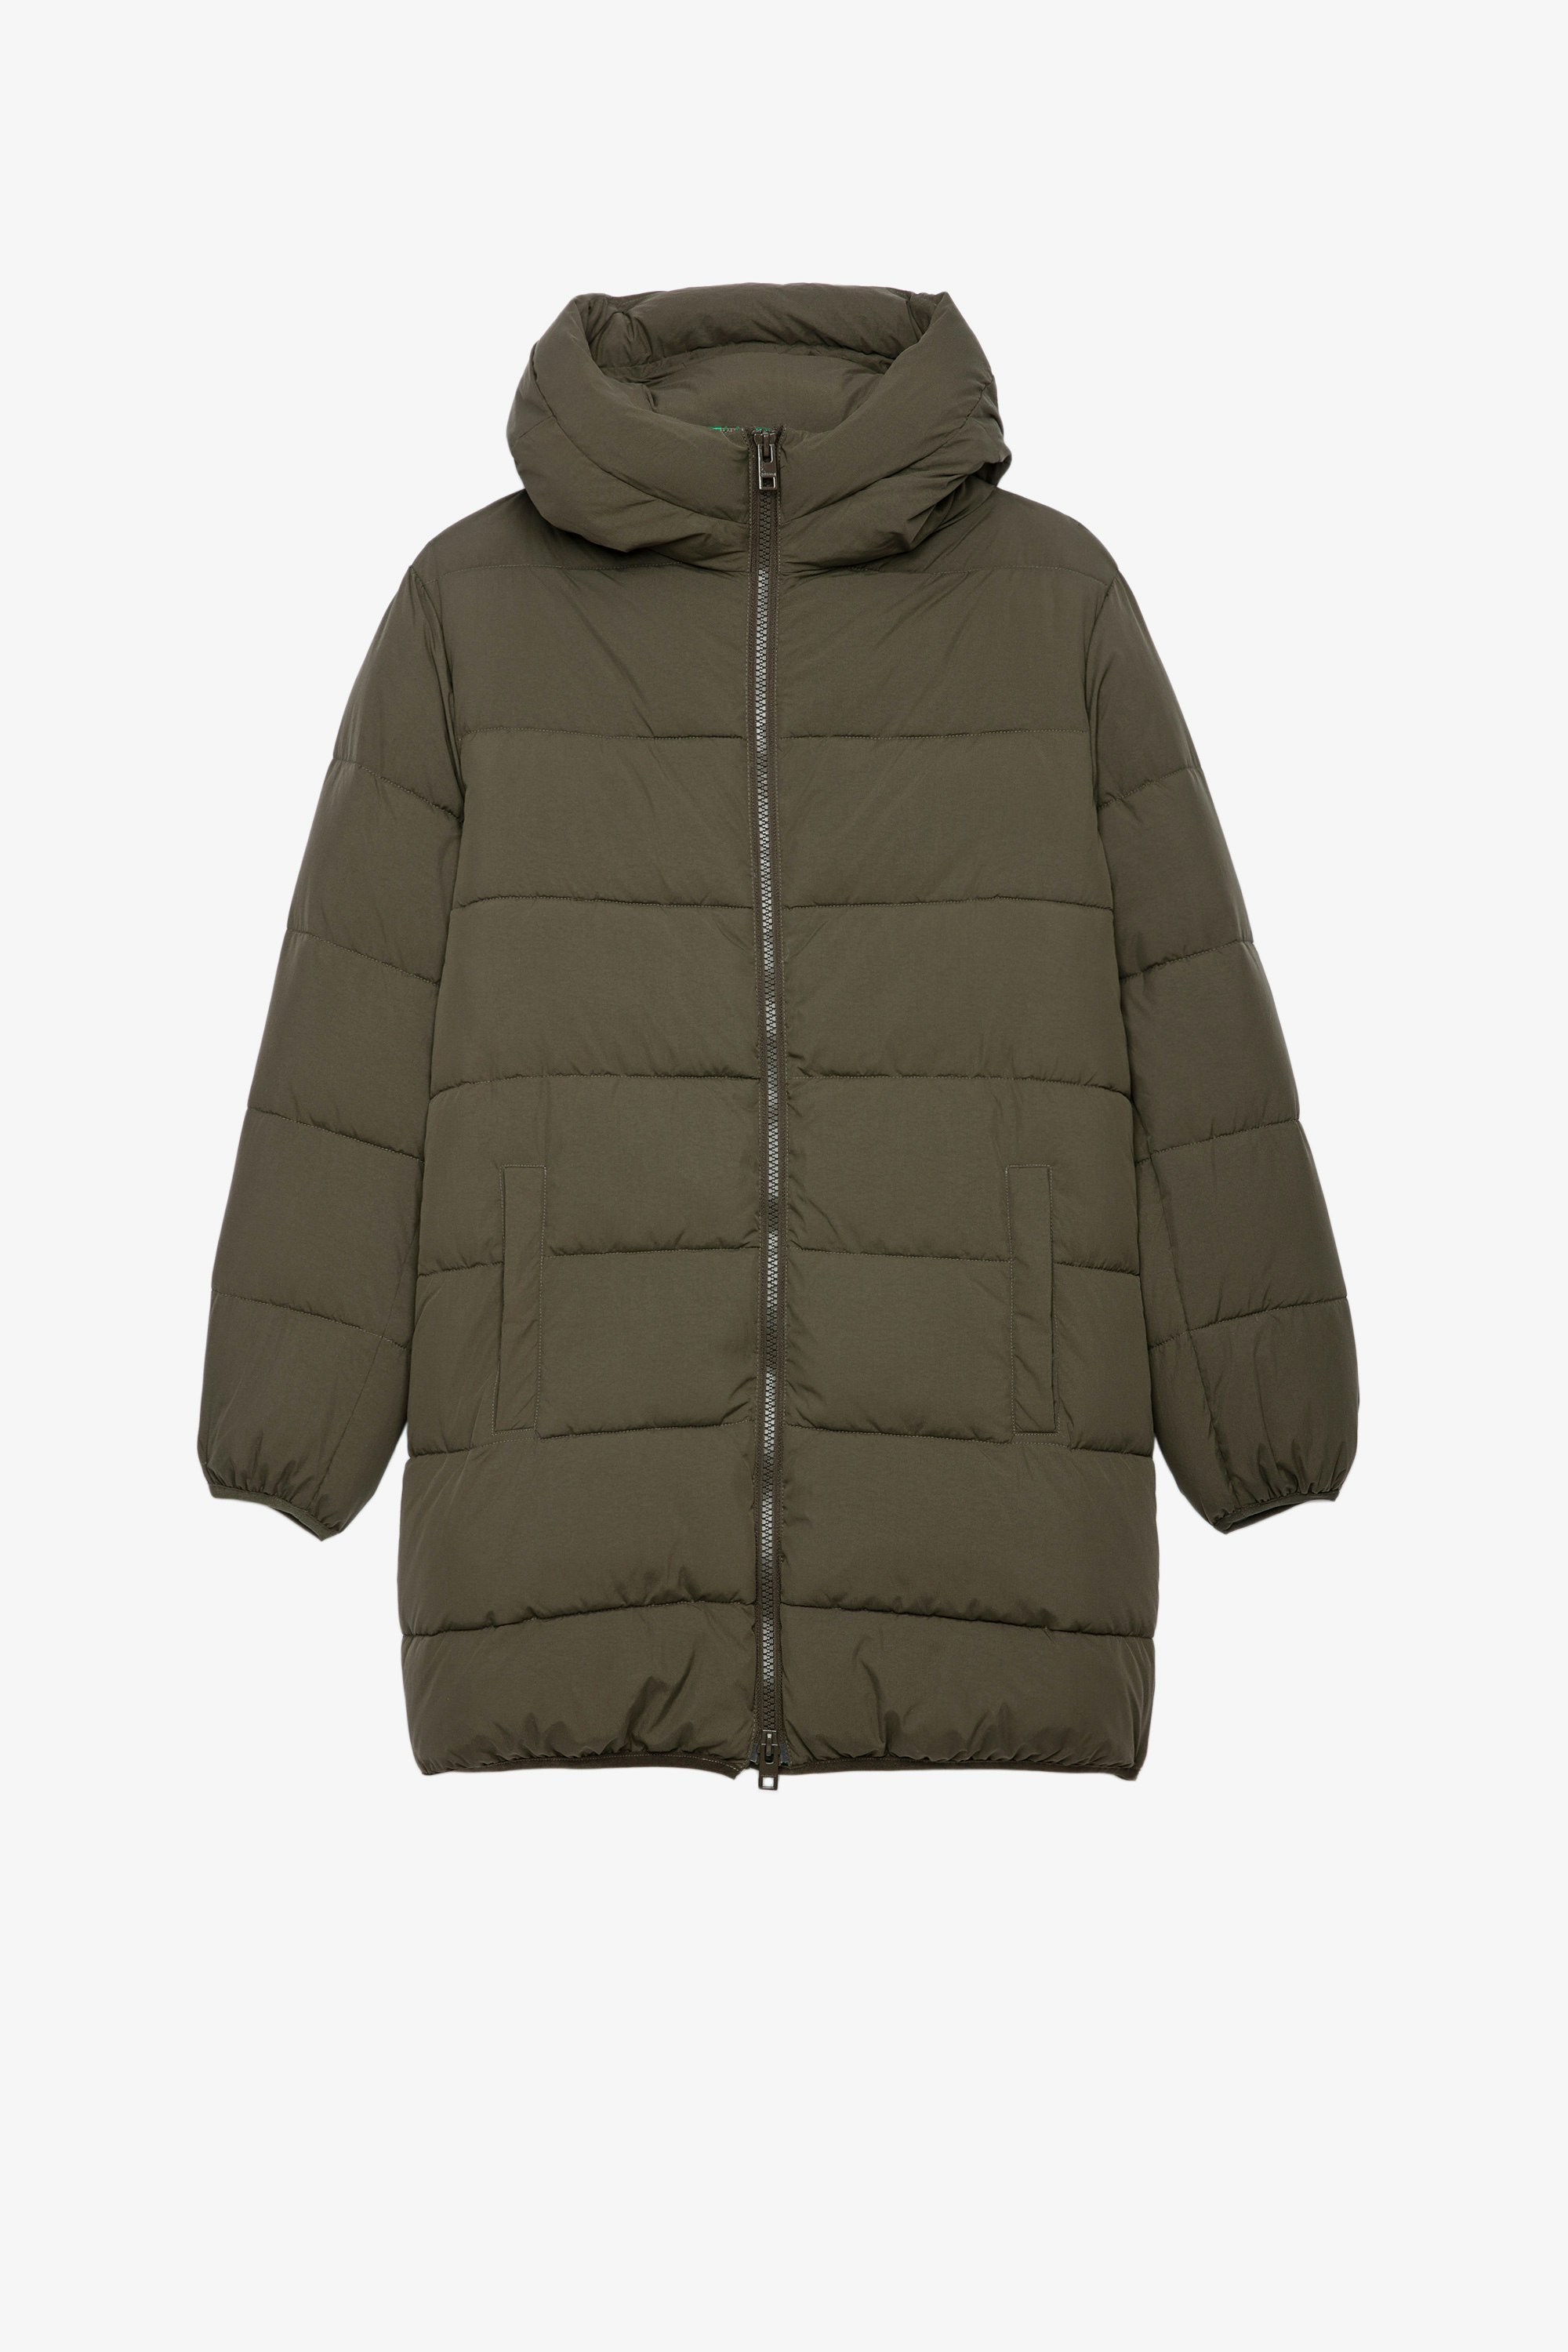 Korail Coat Women’s khaki nylon midi down jacket with hood and contrasting signature ZV band